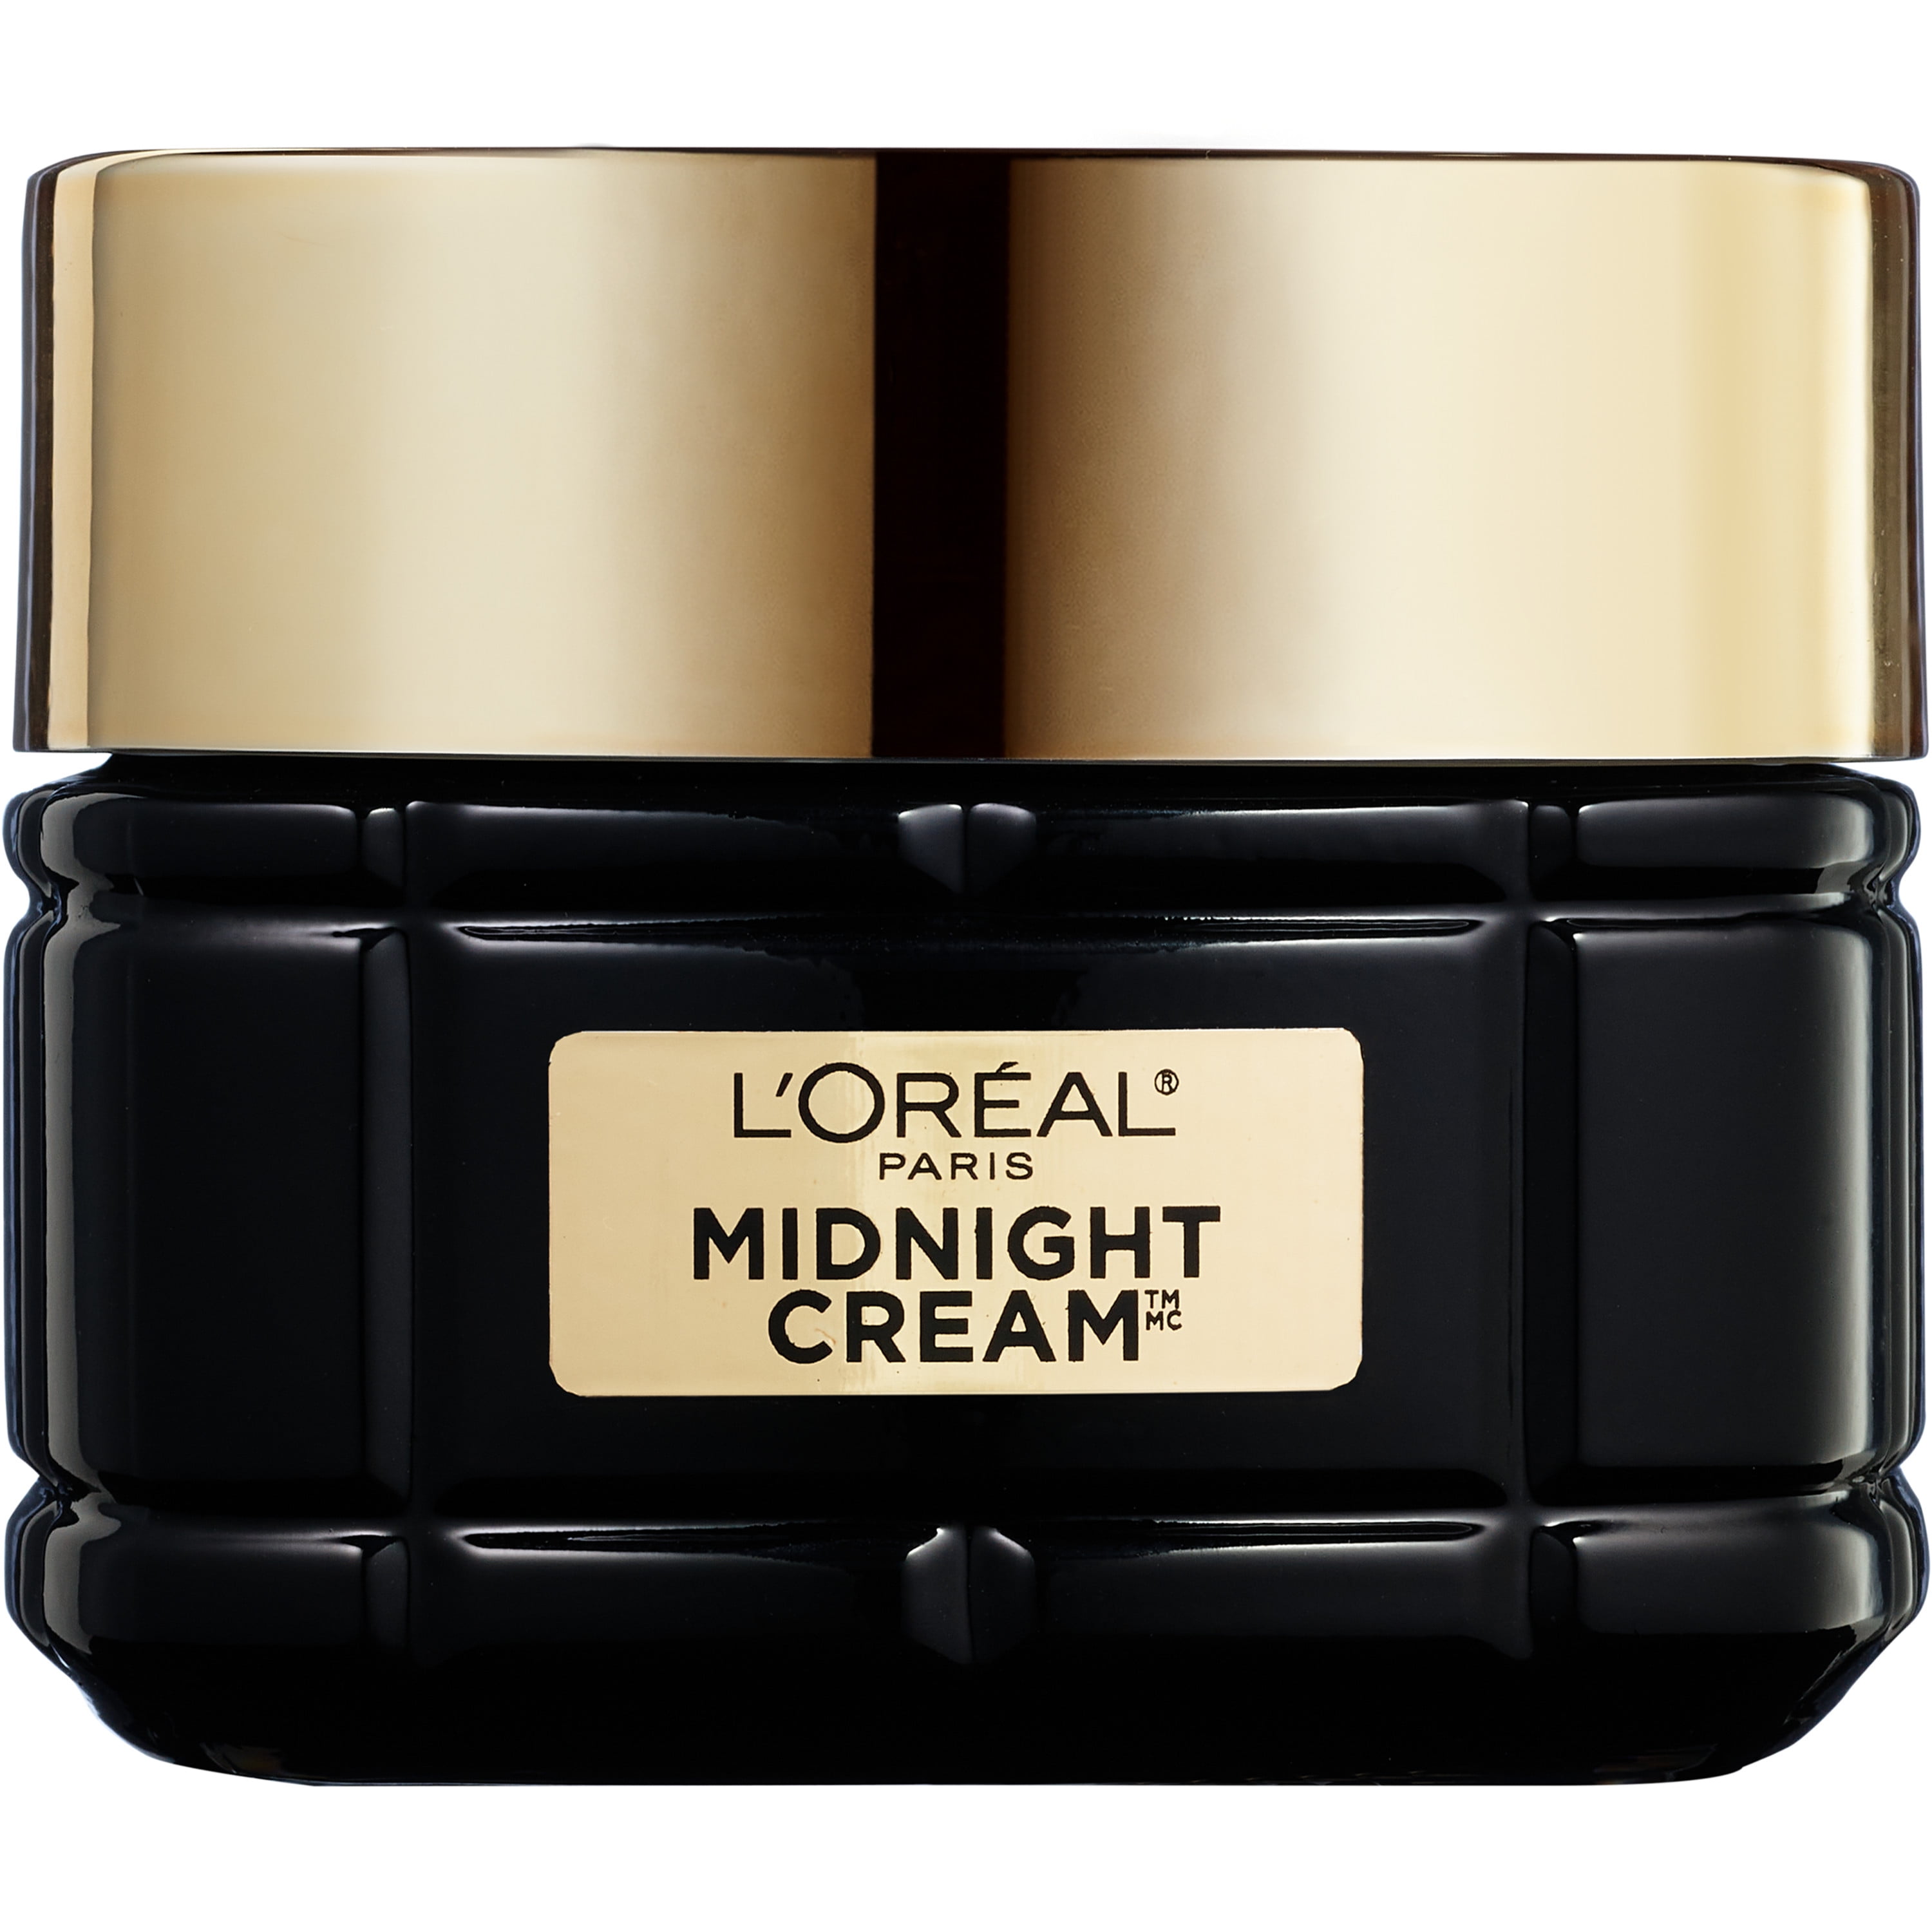 L'Oreal Paris Age Perfect Cell Renewal Midnight Cream, Antioxidants, Facial Moisturizers, 1.7 oz